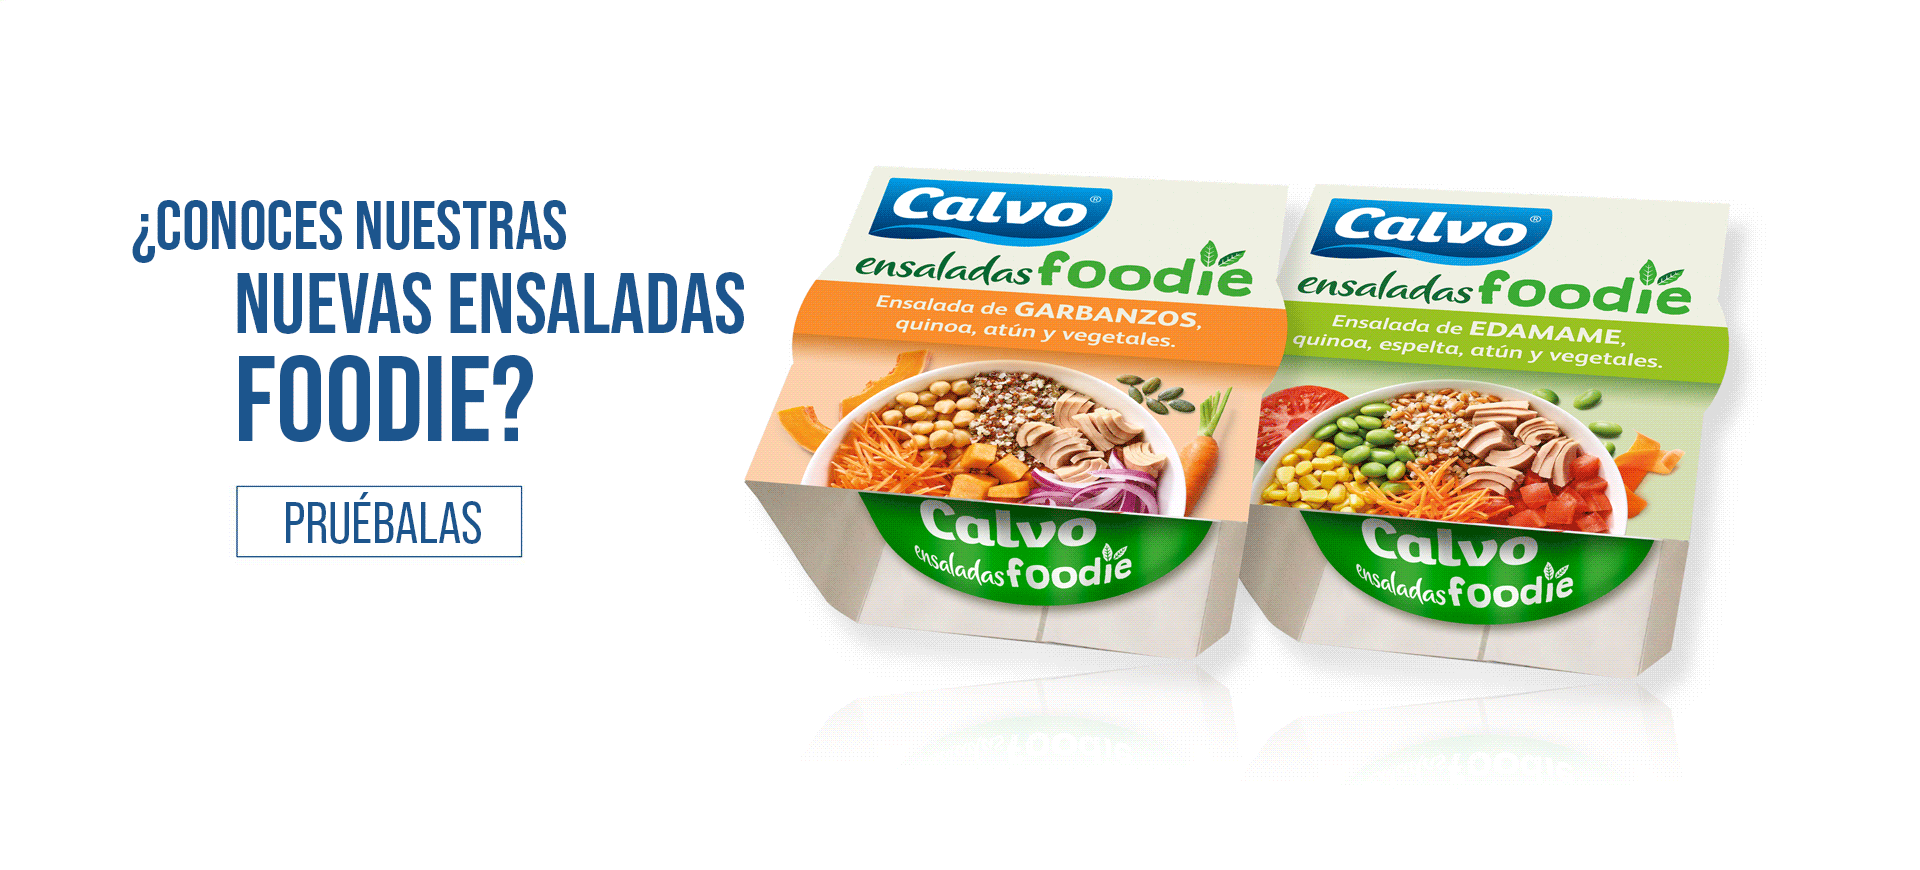 Nuevas Ensaladas Foodie de Garbanzos o Quinoa de Calvo